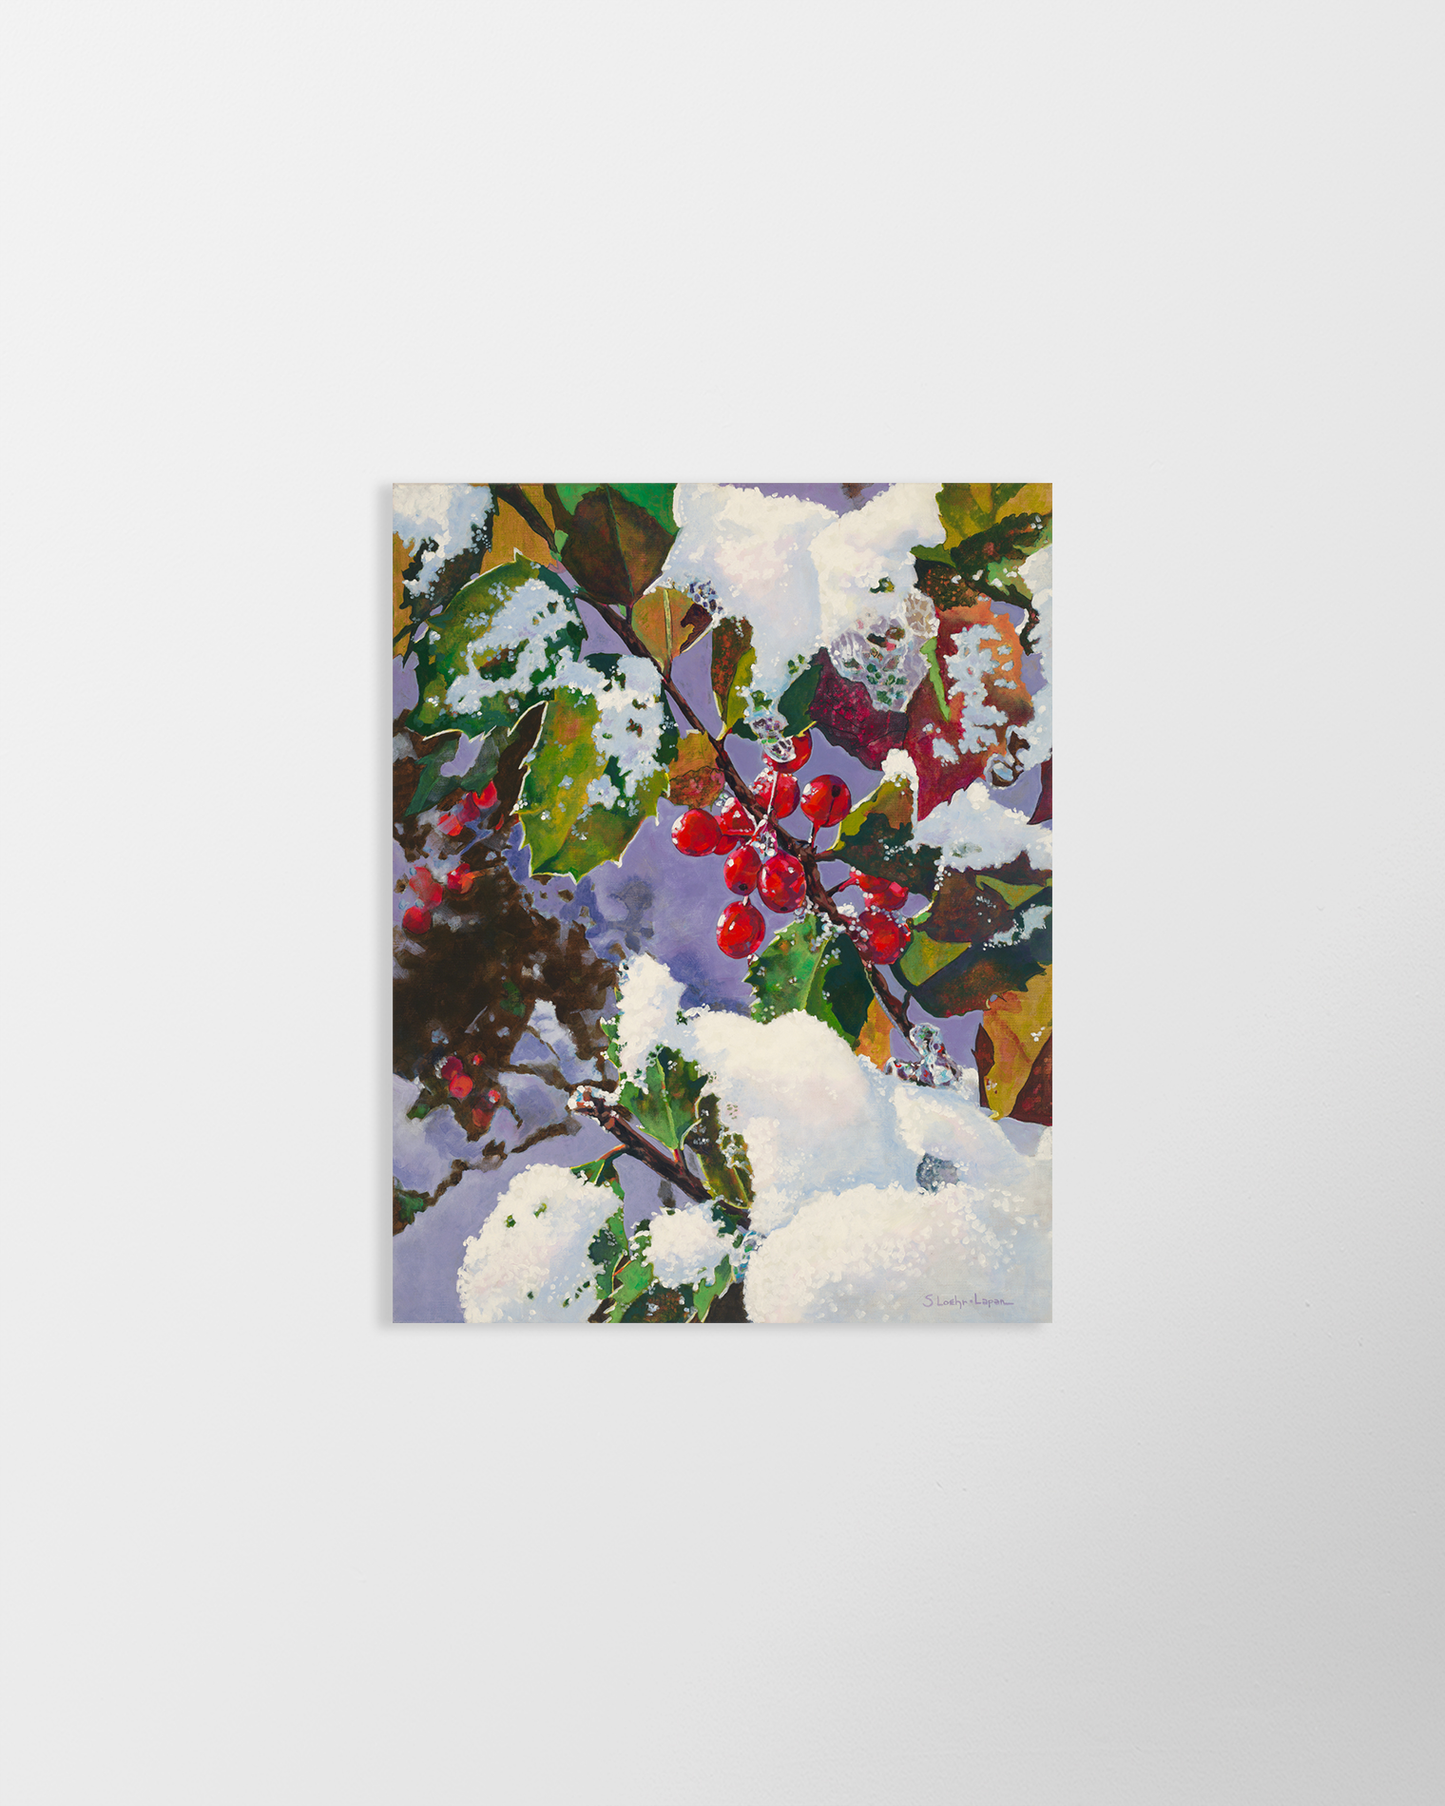 Holly Berries – print by Sharon Loehr-Lapan